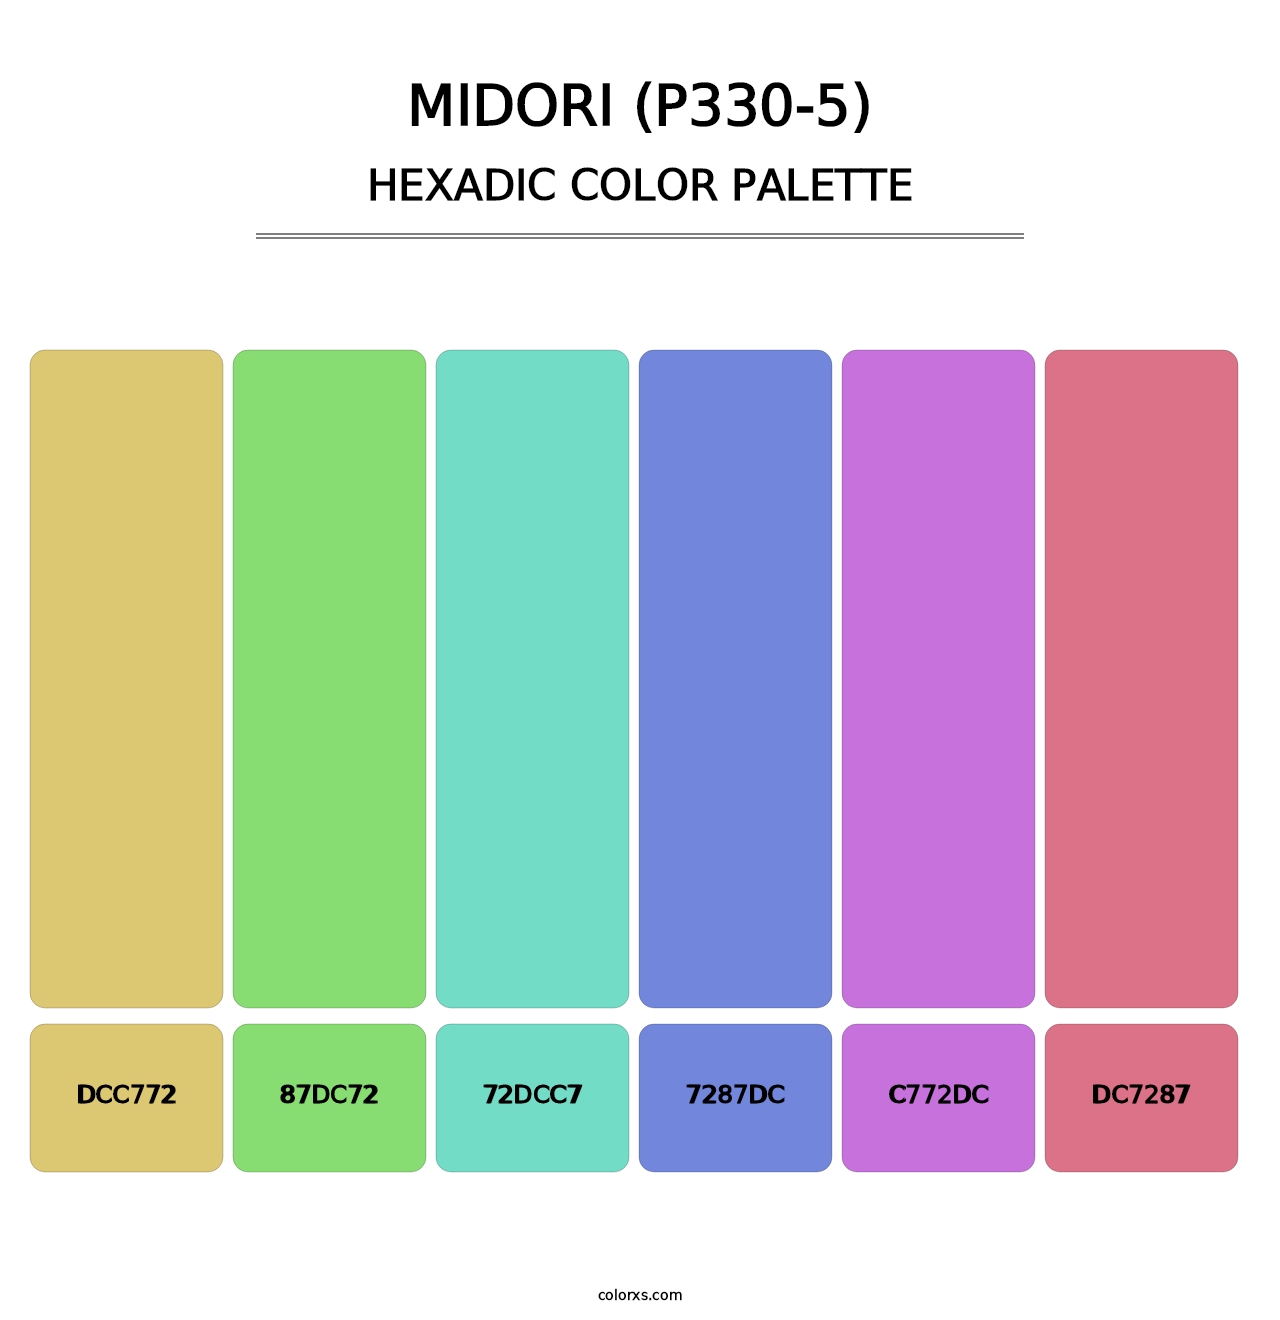 Midori (P330-5) - Hexadic Color Palette